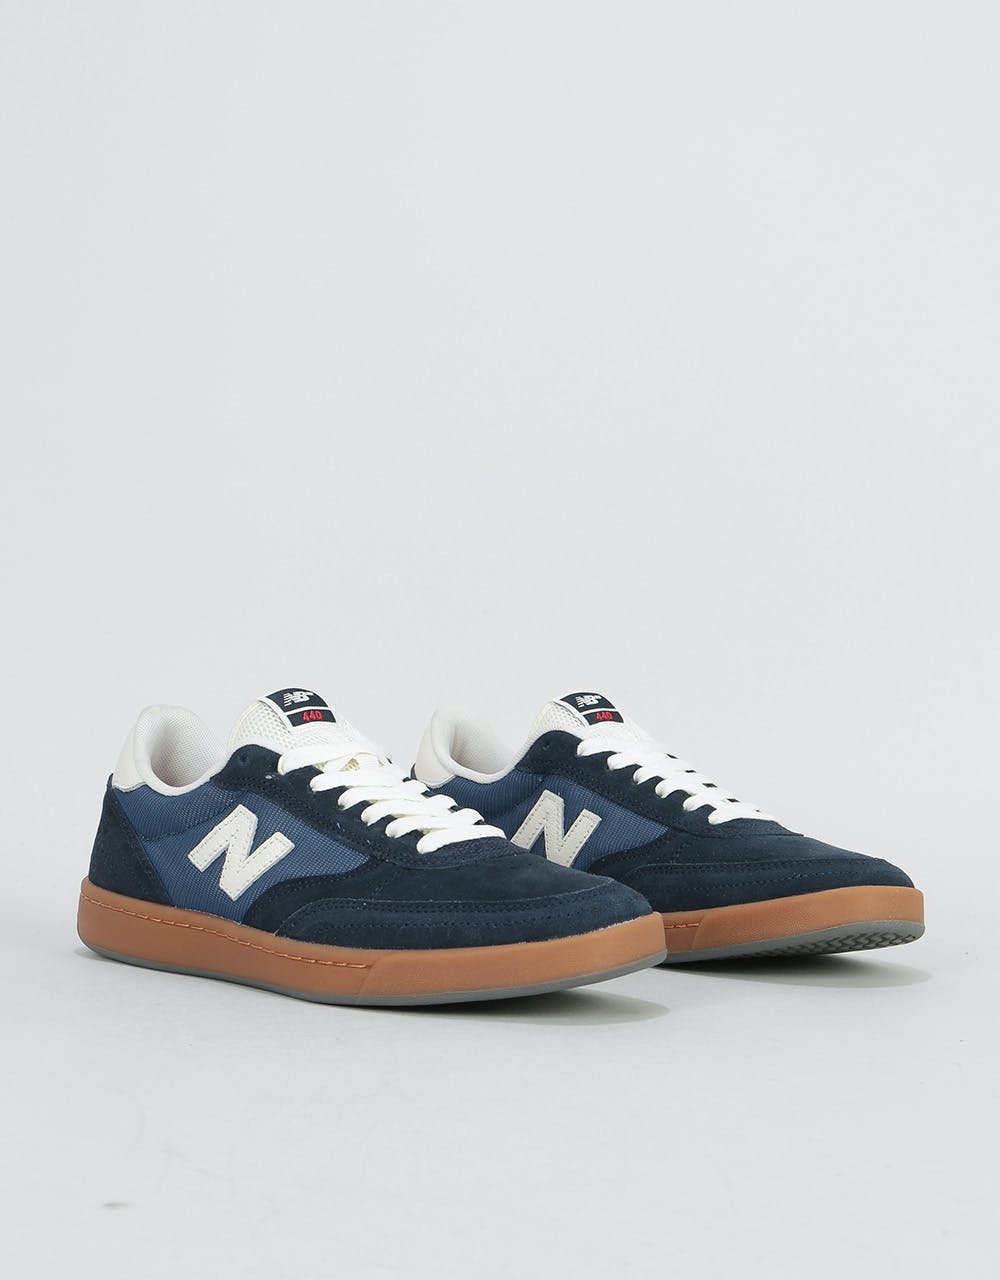 New Balance Numeric 440 Skate Shoes - Navy/Gum